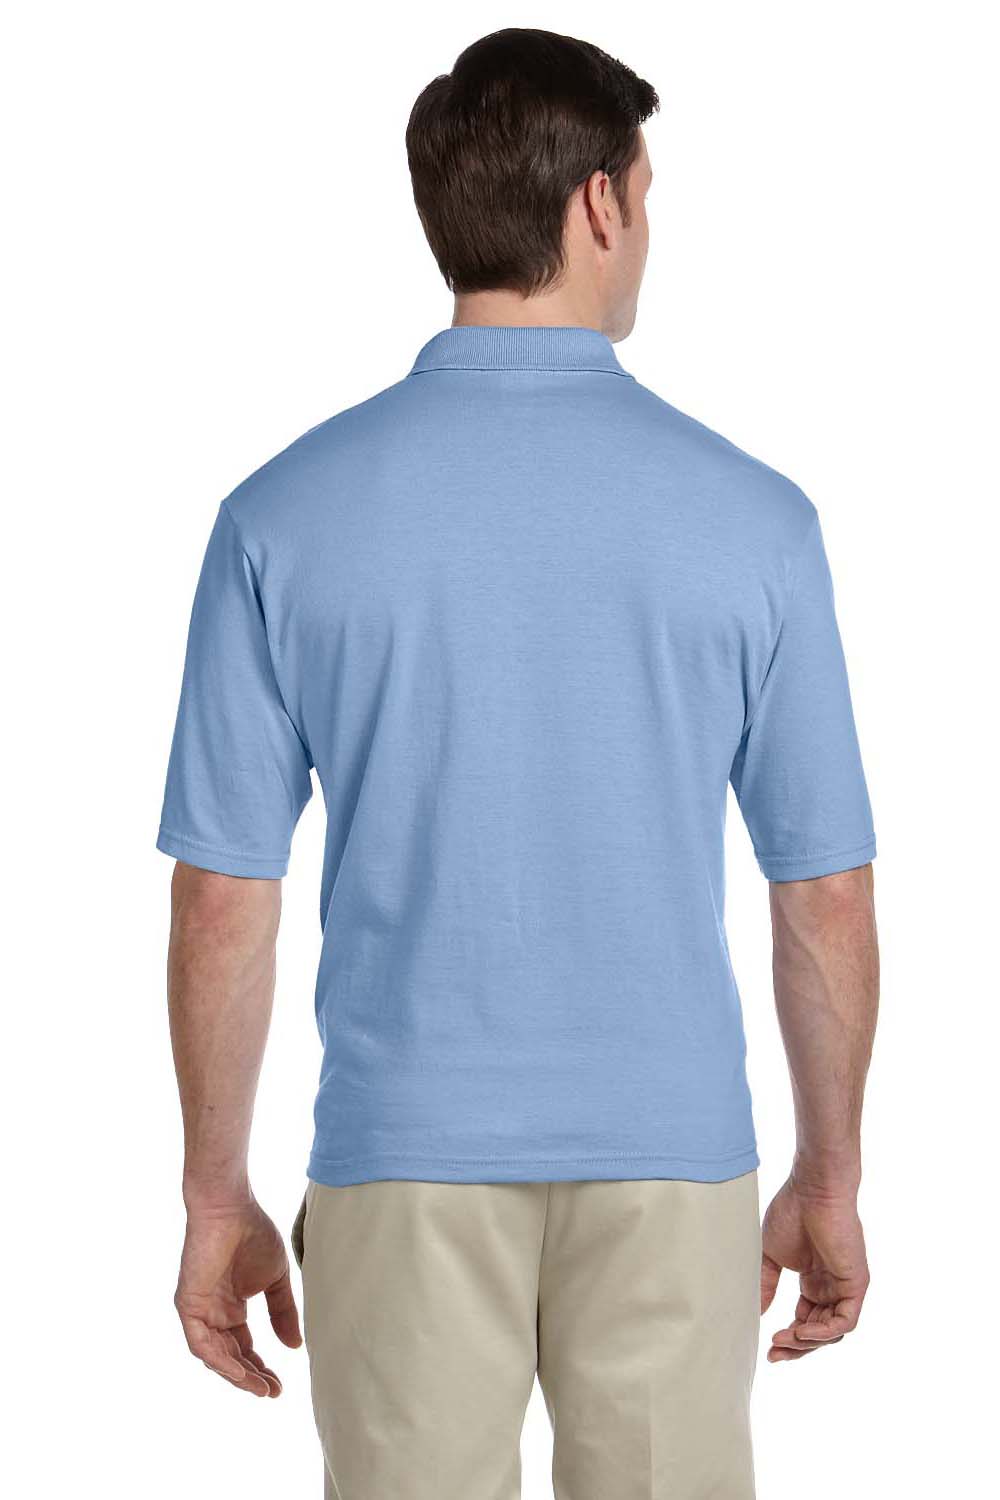 Jerzees 436P Mens SpotShield Stain Resistant Short Sleeve Polo Shirt w/ Pocket Light Blue Back